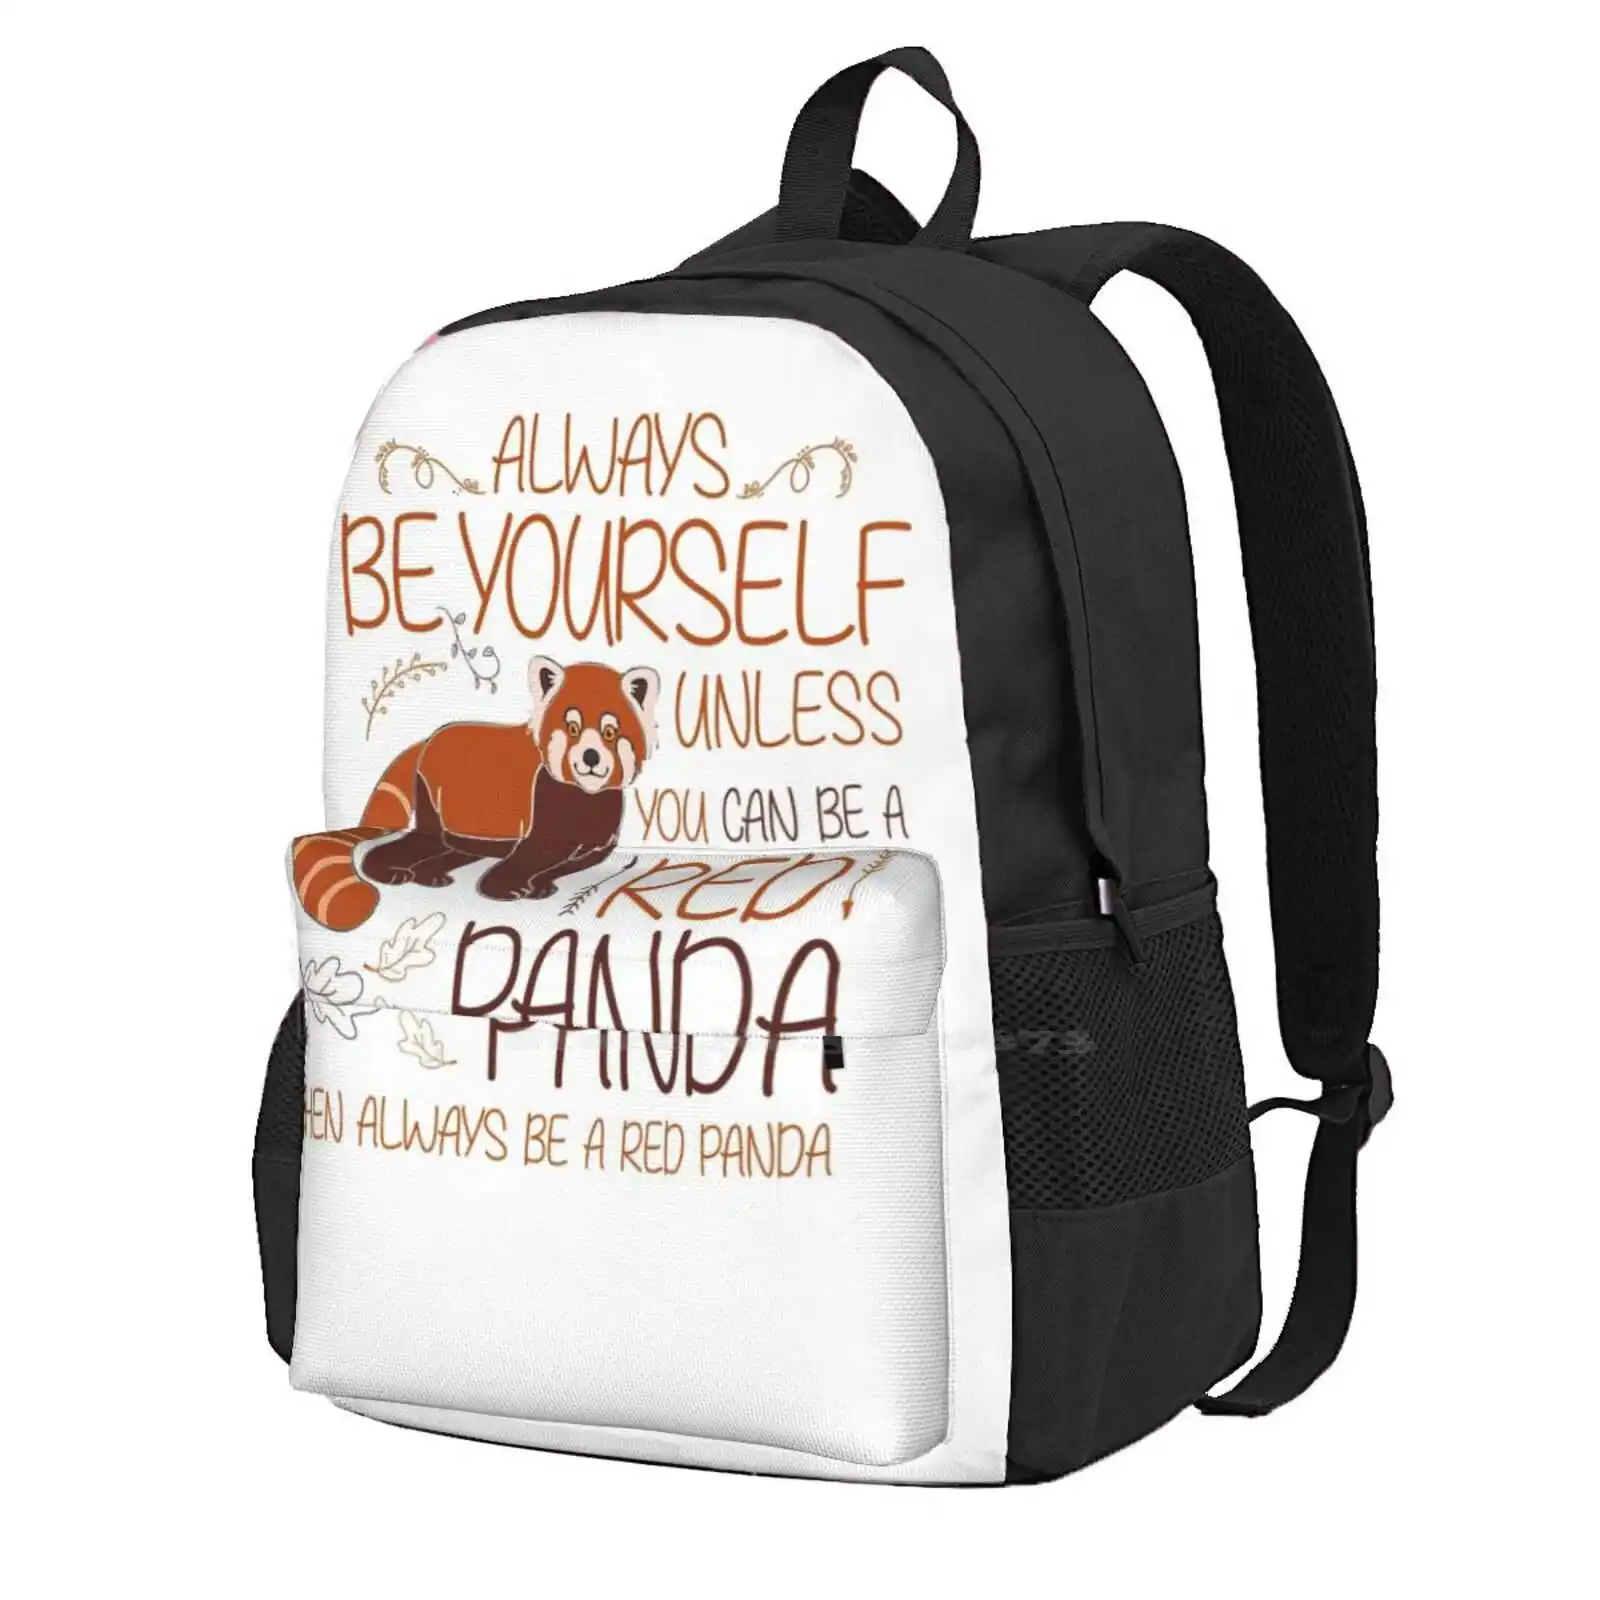 

Always Be Yourself Cute Red Panda Gift Backpacks For School Teenagers Girls Travel Bags Animal Pet Adorable Funny Humor Slogan